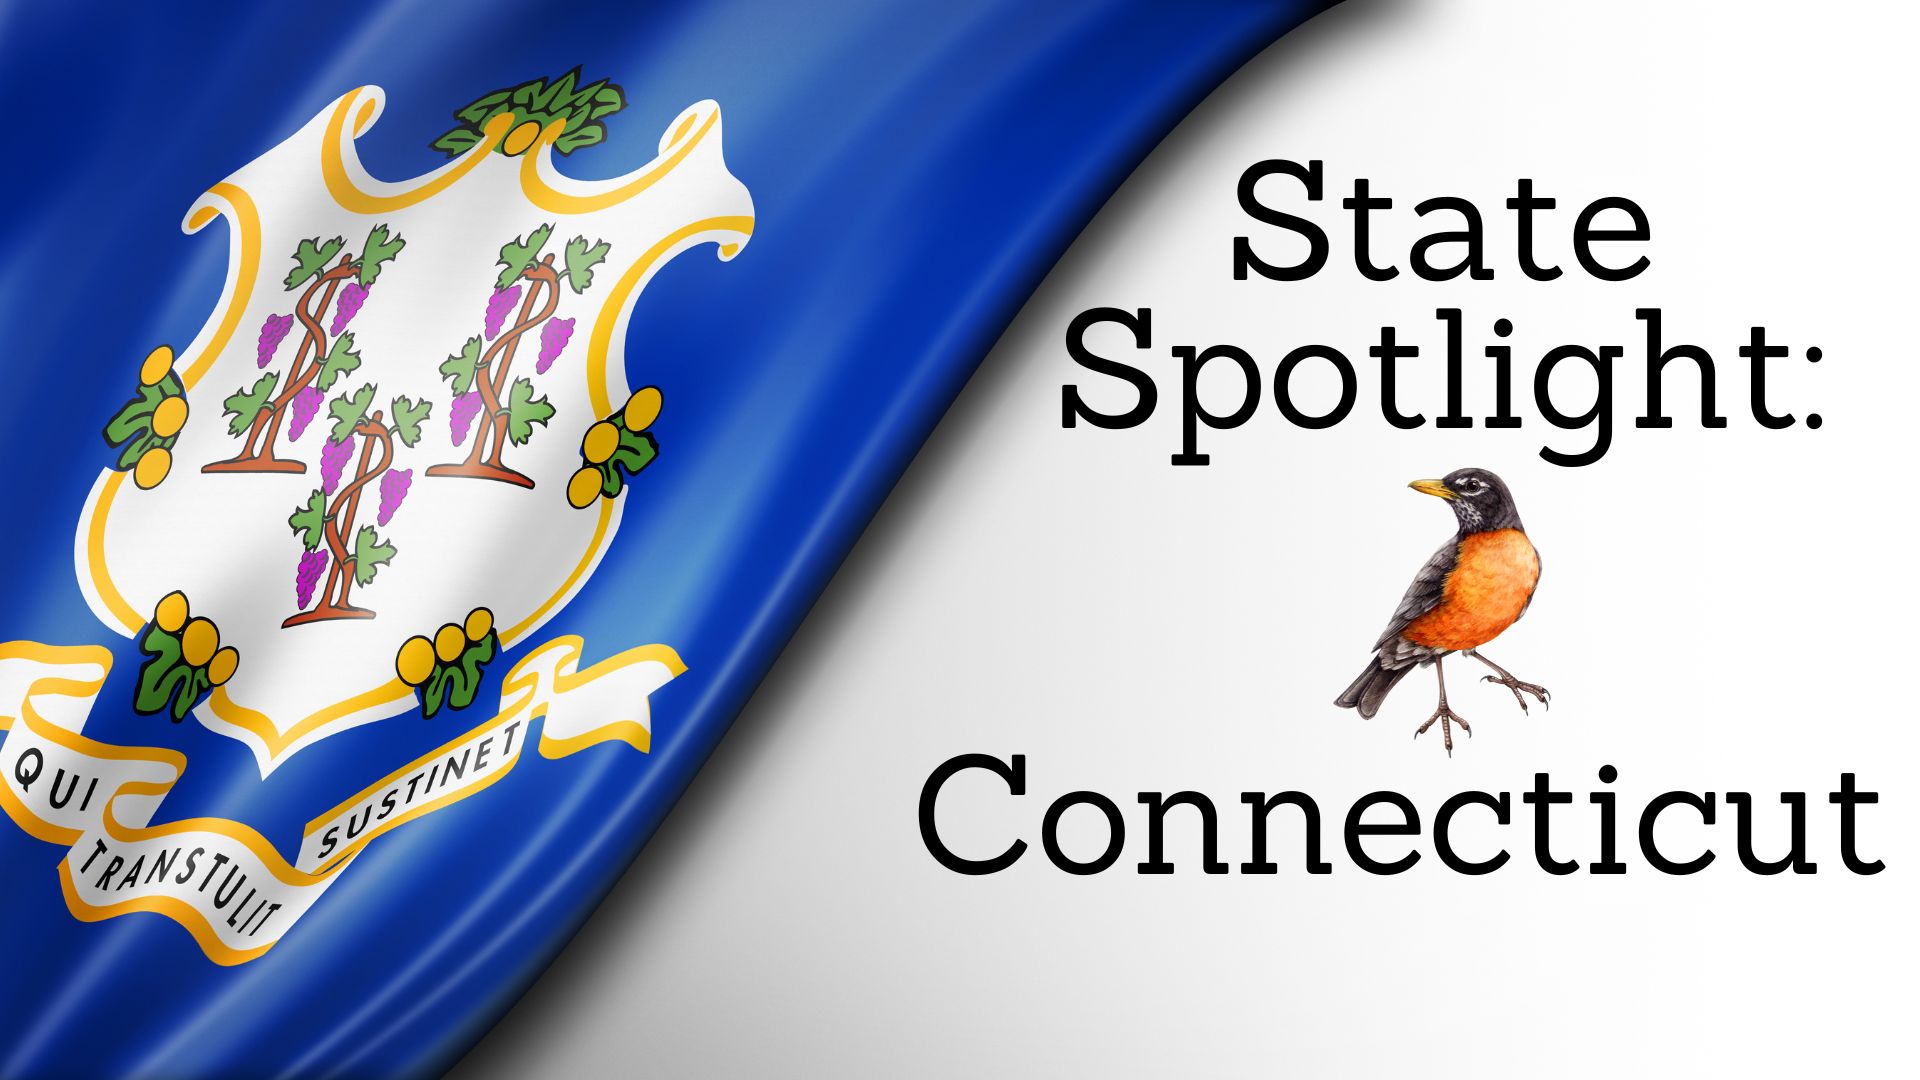 State Spotlight: Connecticut